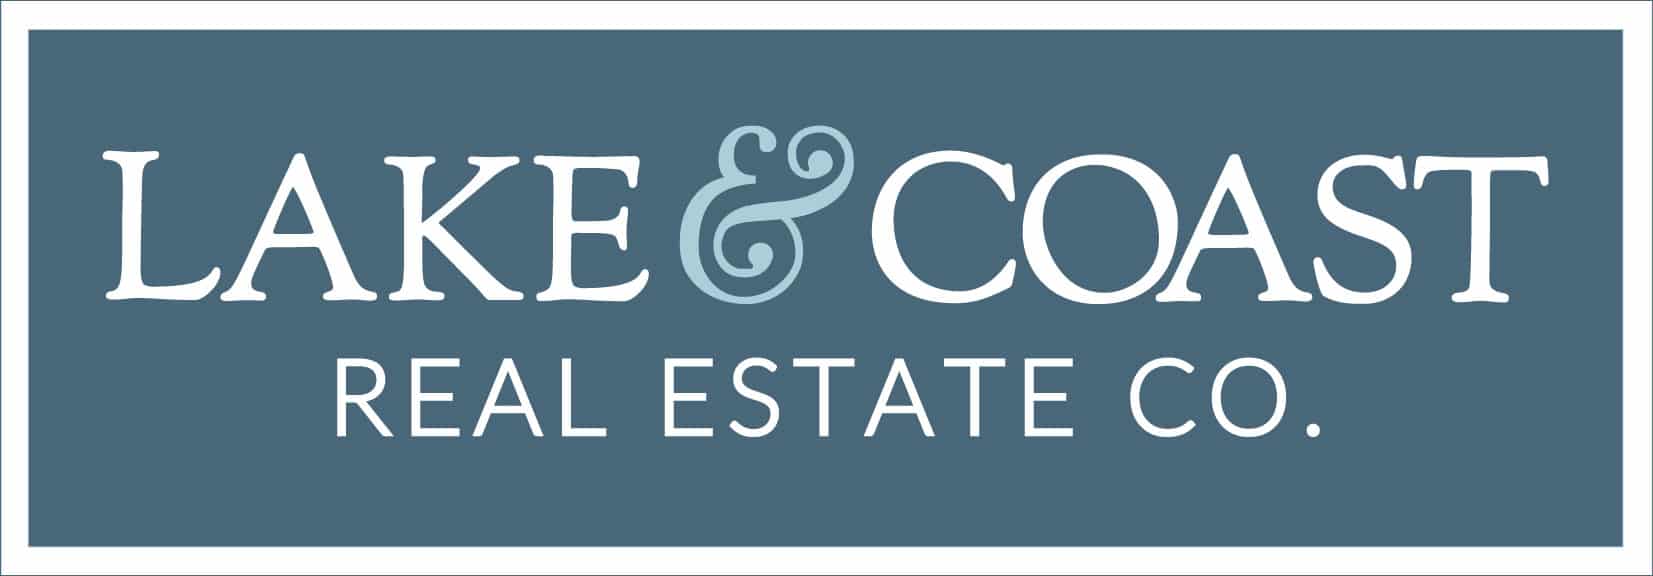 Lake & Coast Real Estate Co. Logo